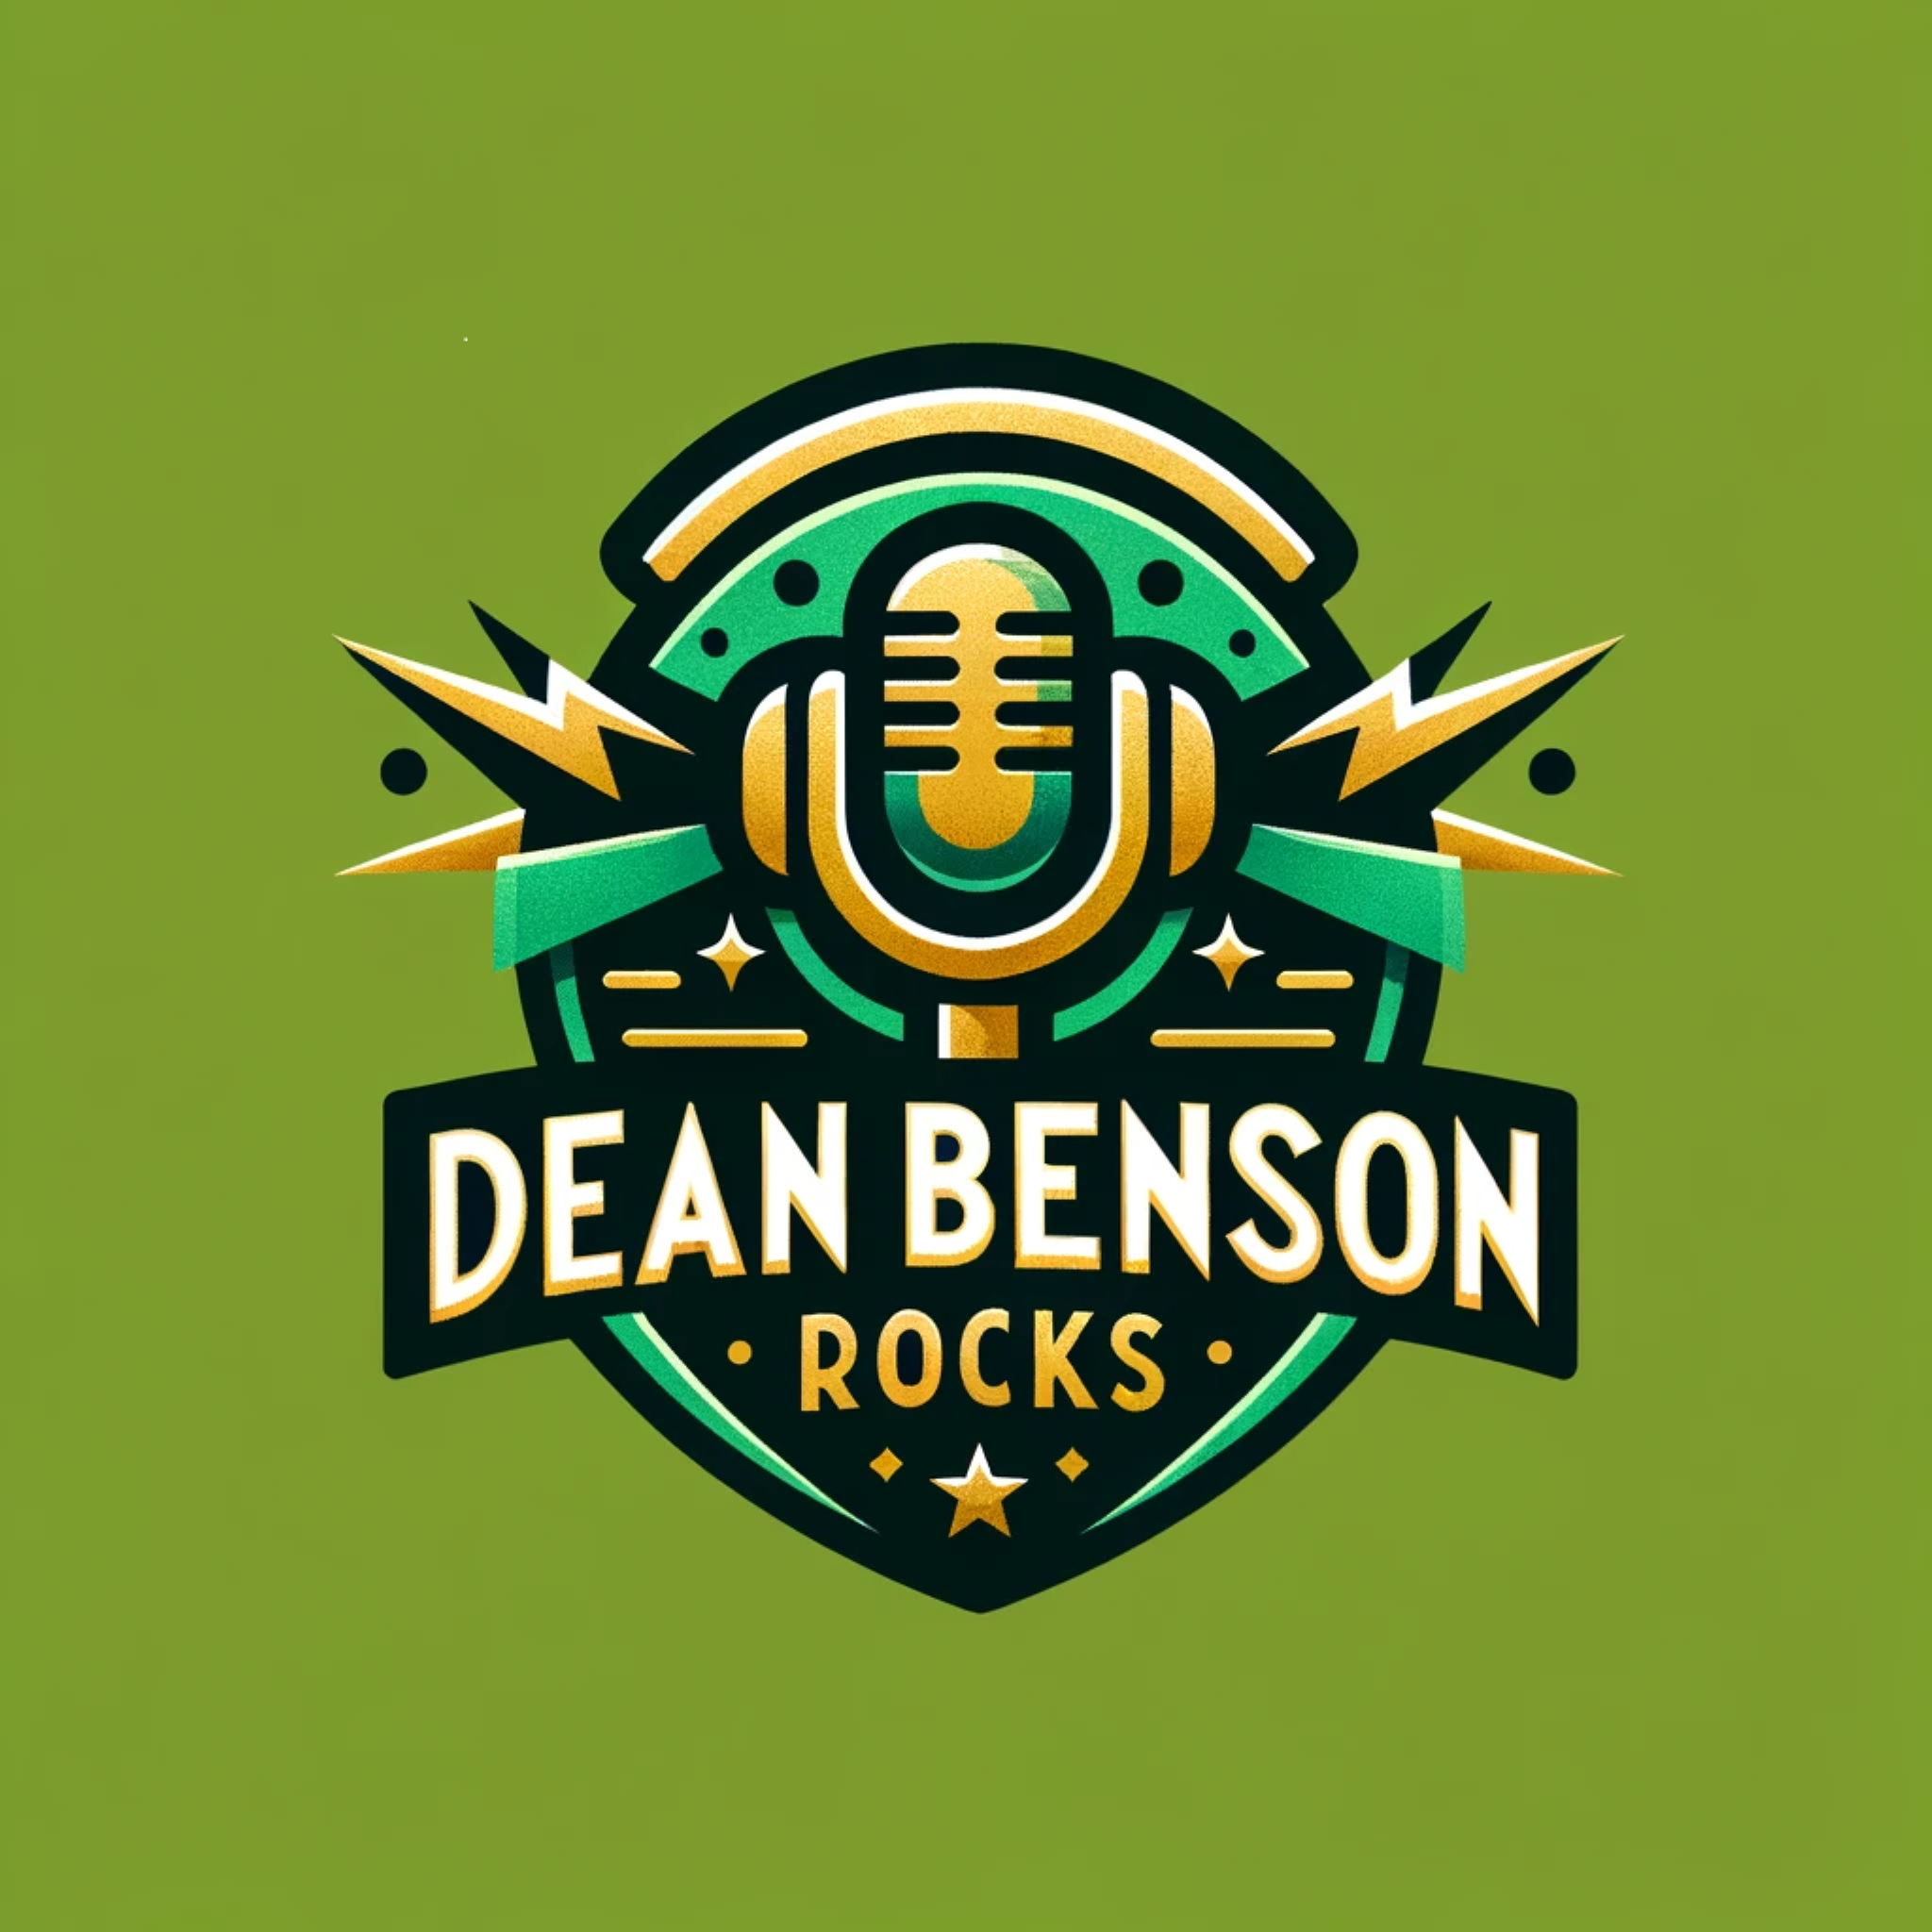 Dean Benson Rocks